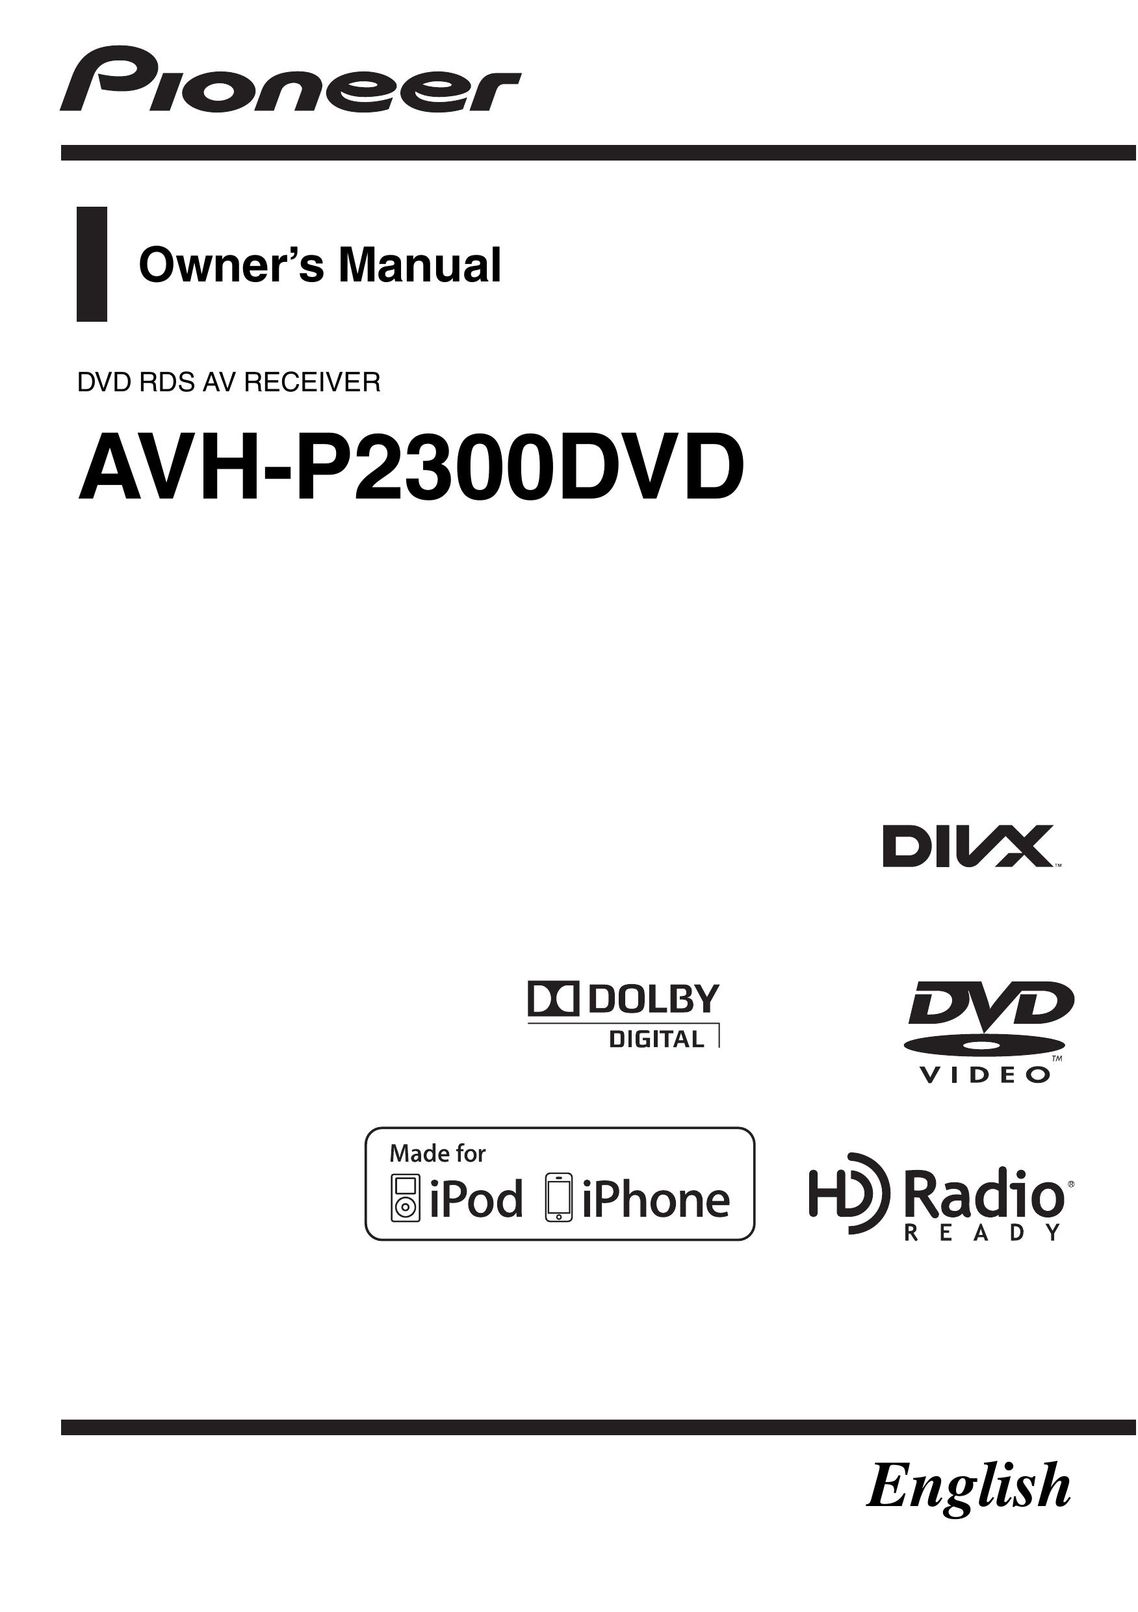 Pioneer AVH-P2300DVD Car Video System User Manual